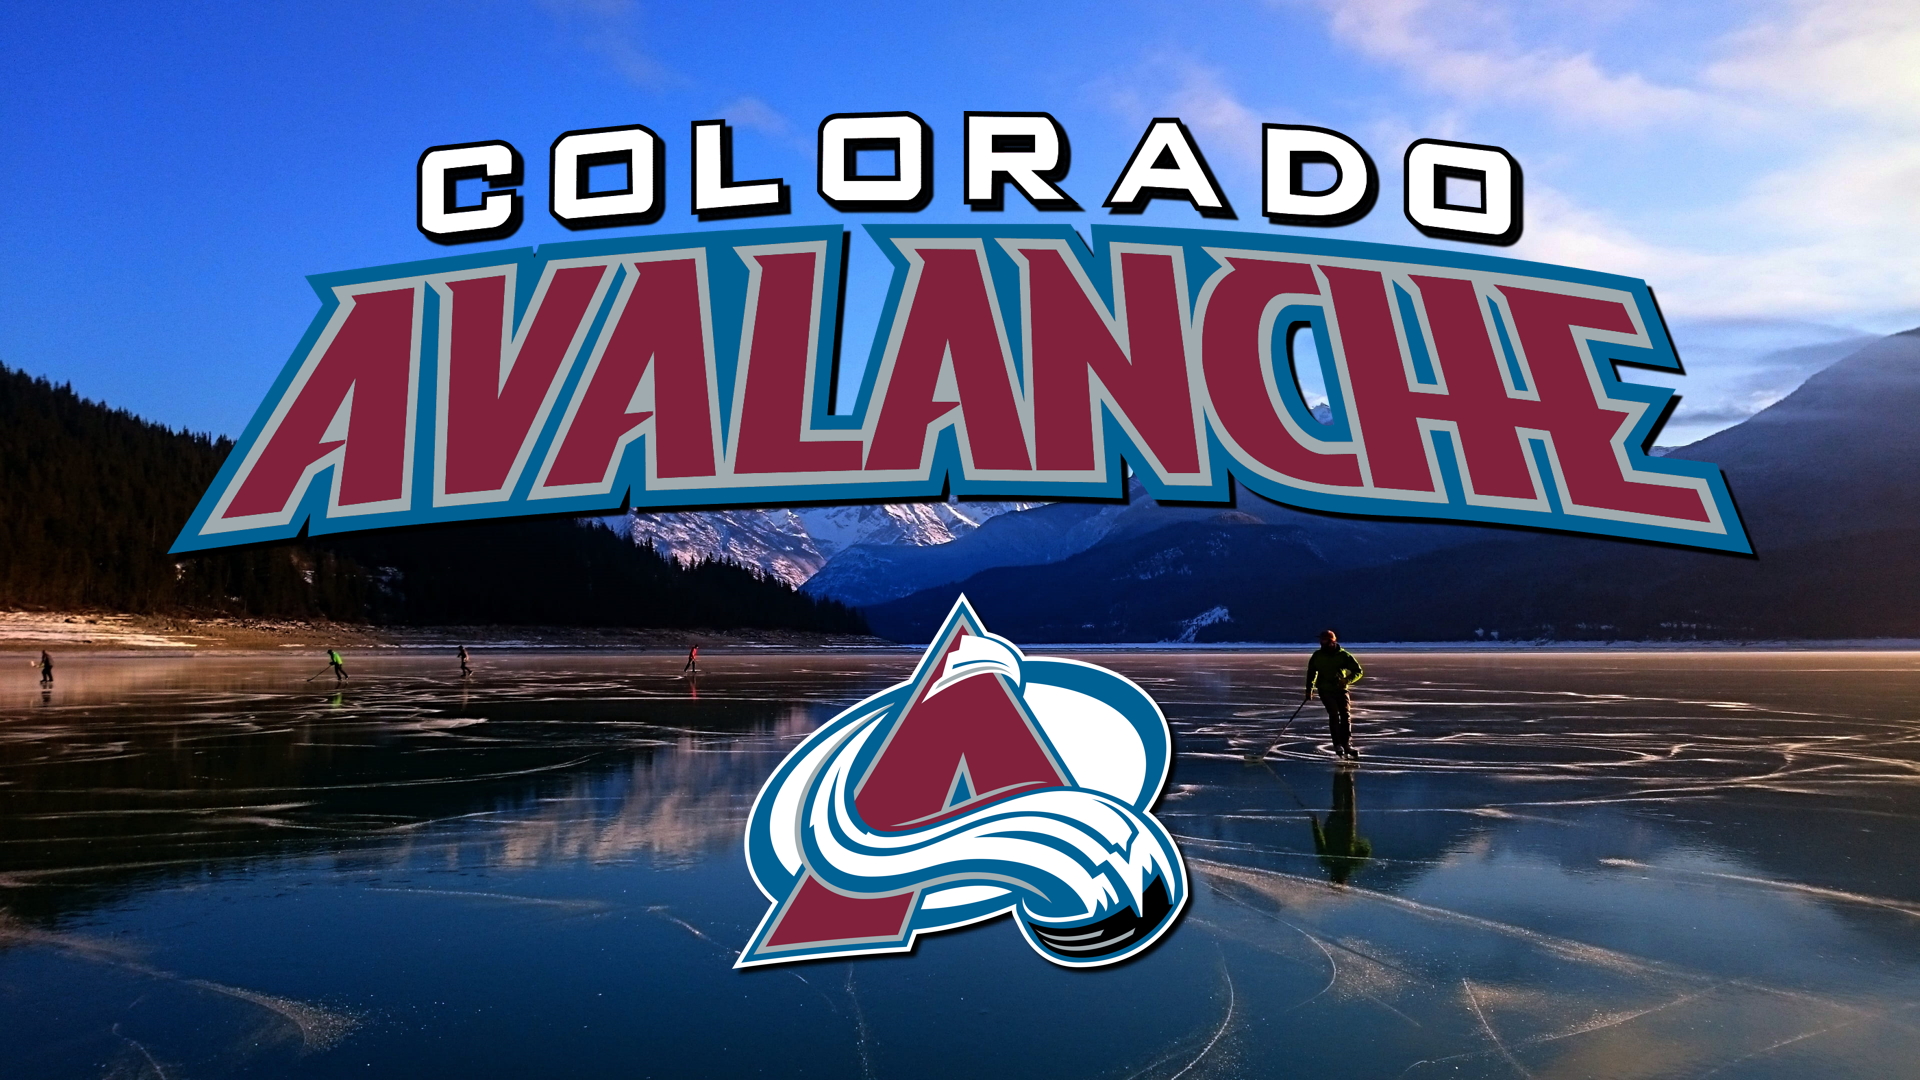 General 1920x1080 Colorado Avalanche NHL Hockey mountains frozen lake logo ice hockey digital art